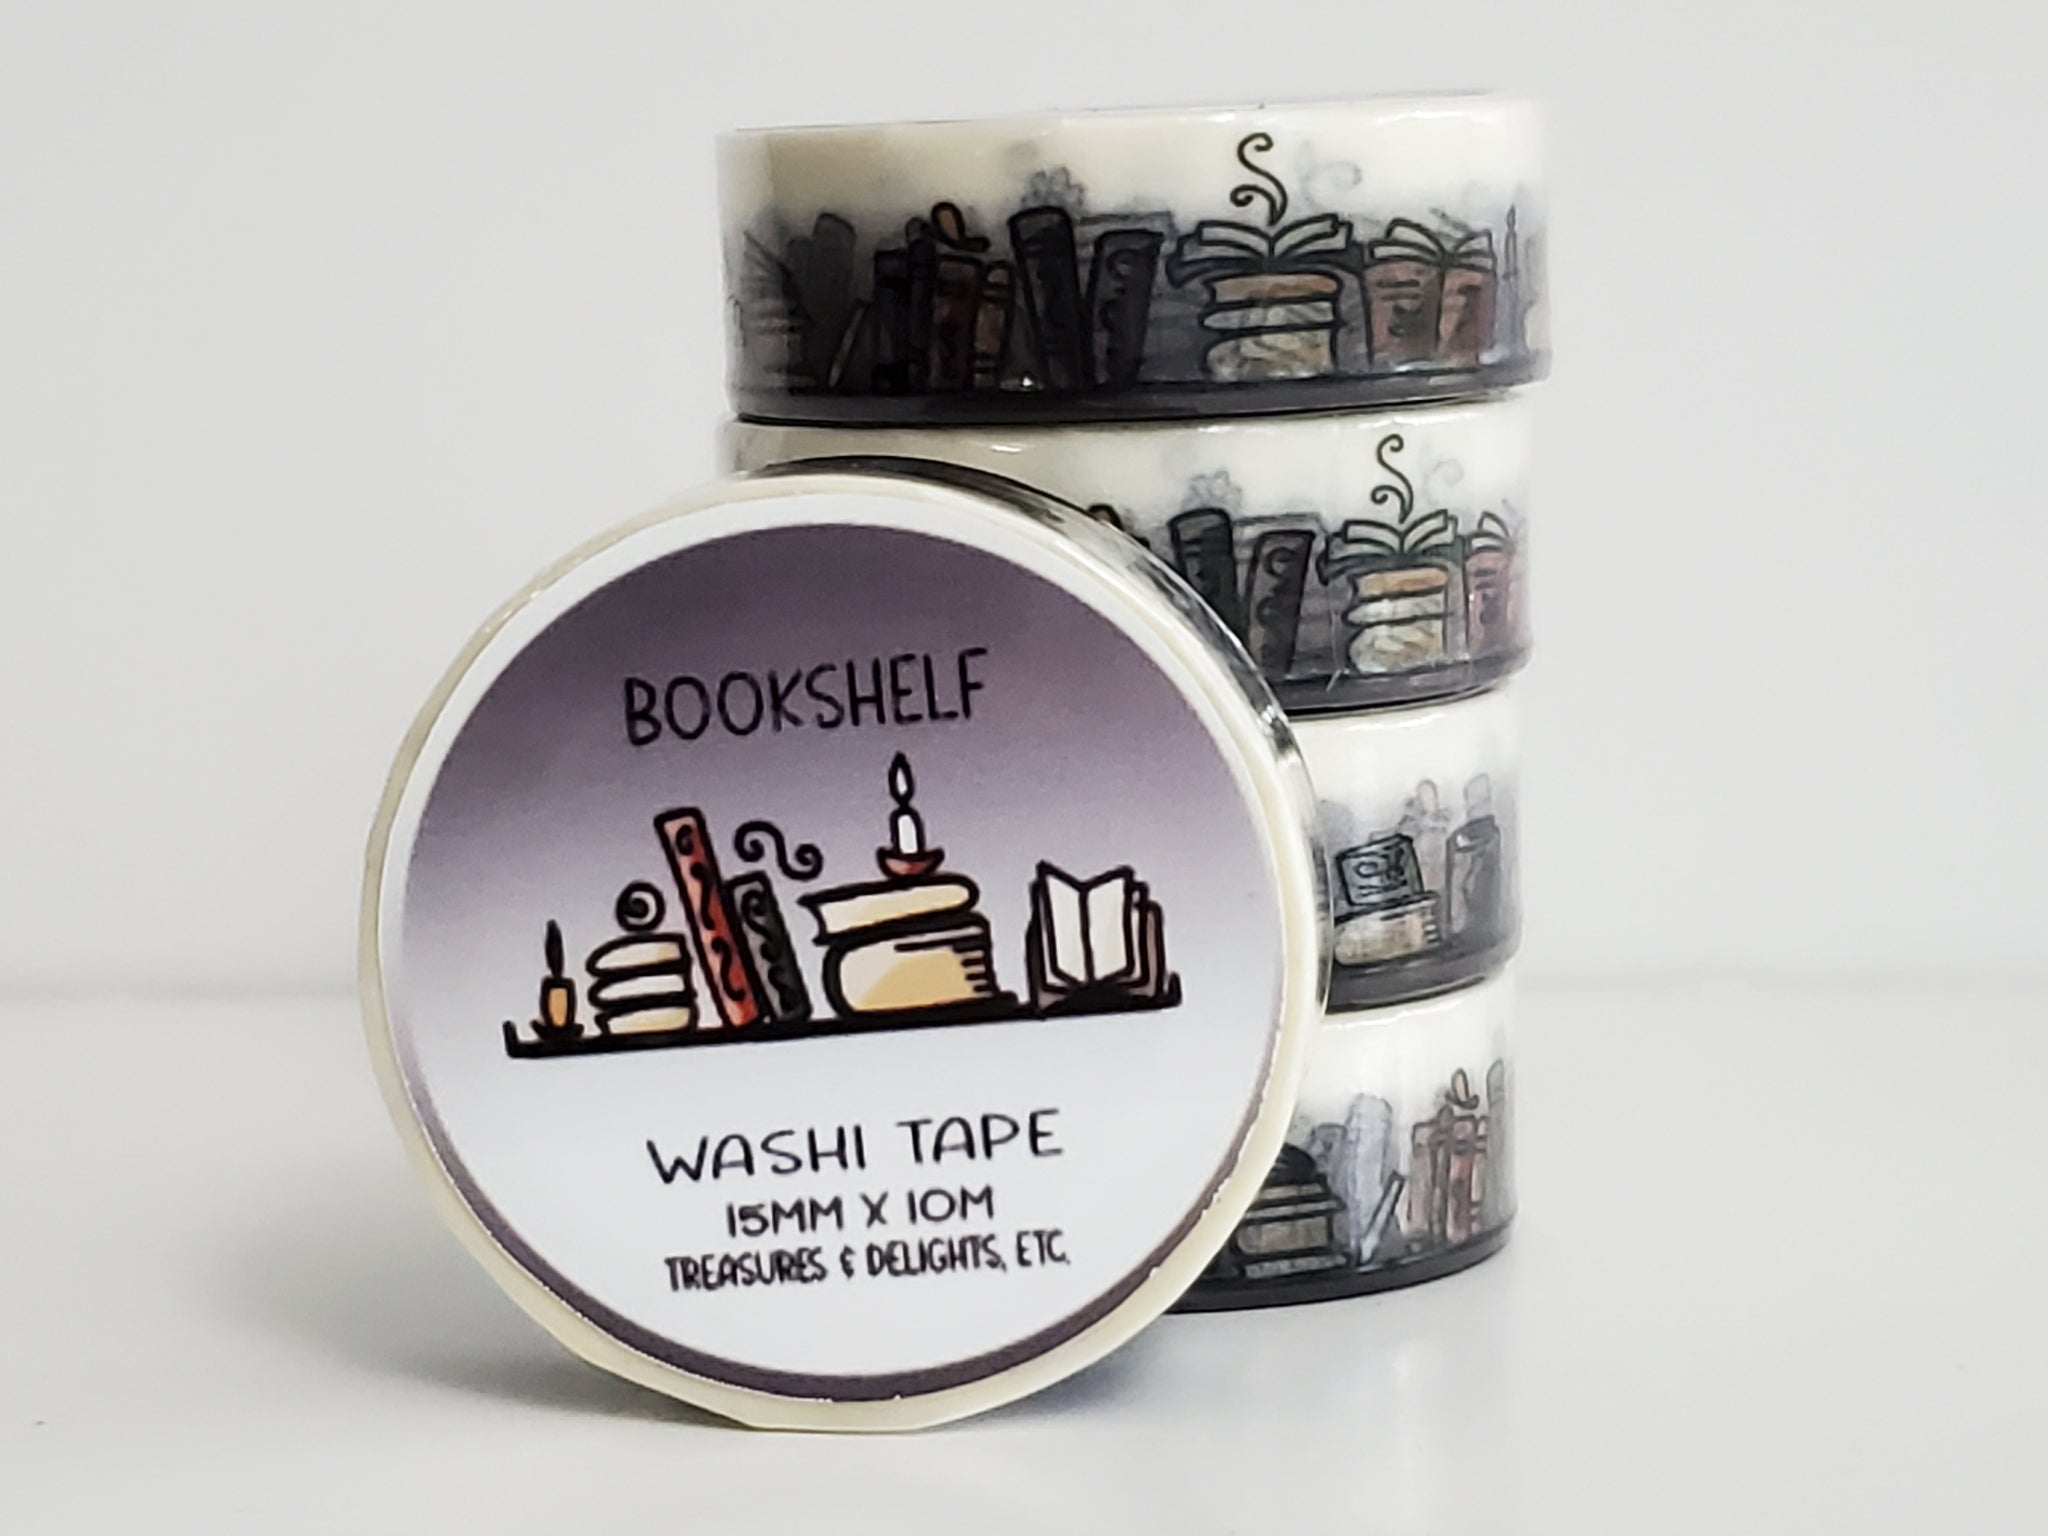 Bookshelf Washi Tape - Treasures & Delights, Etc.